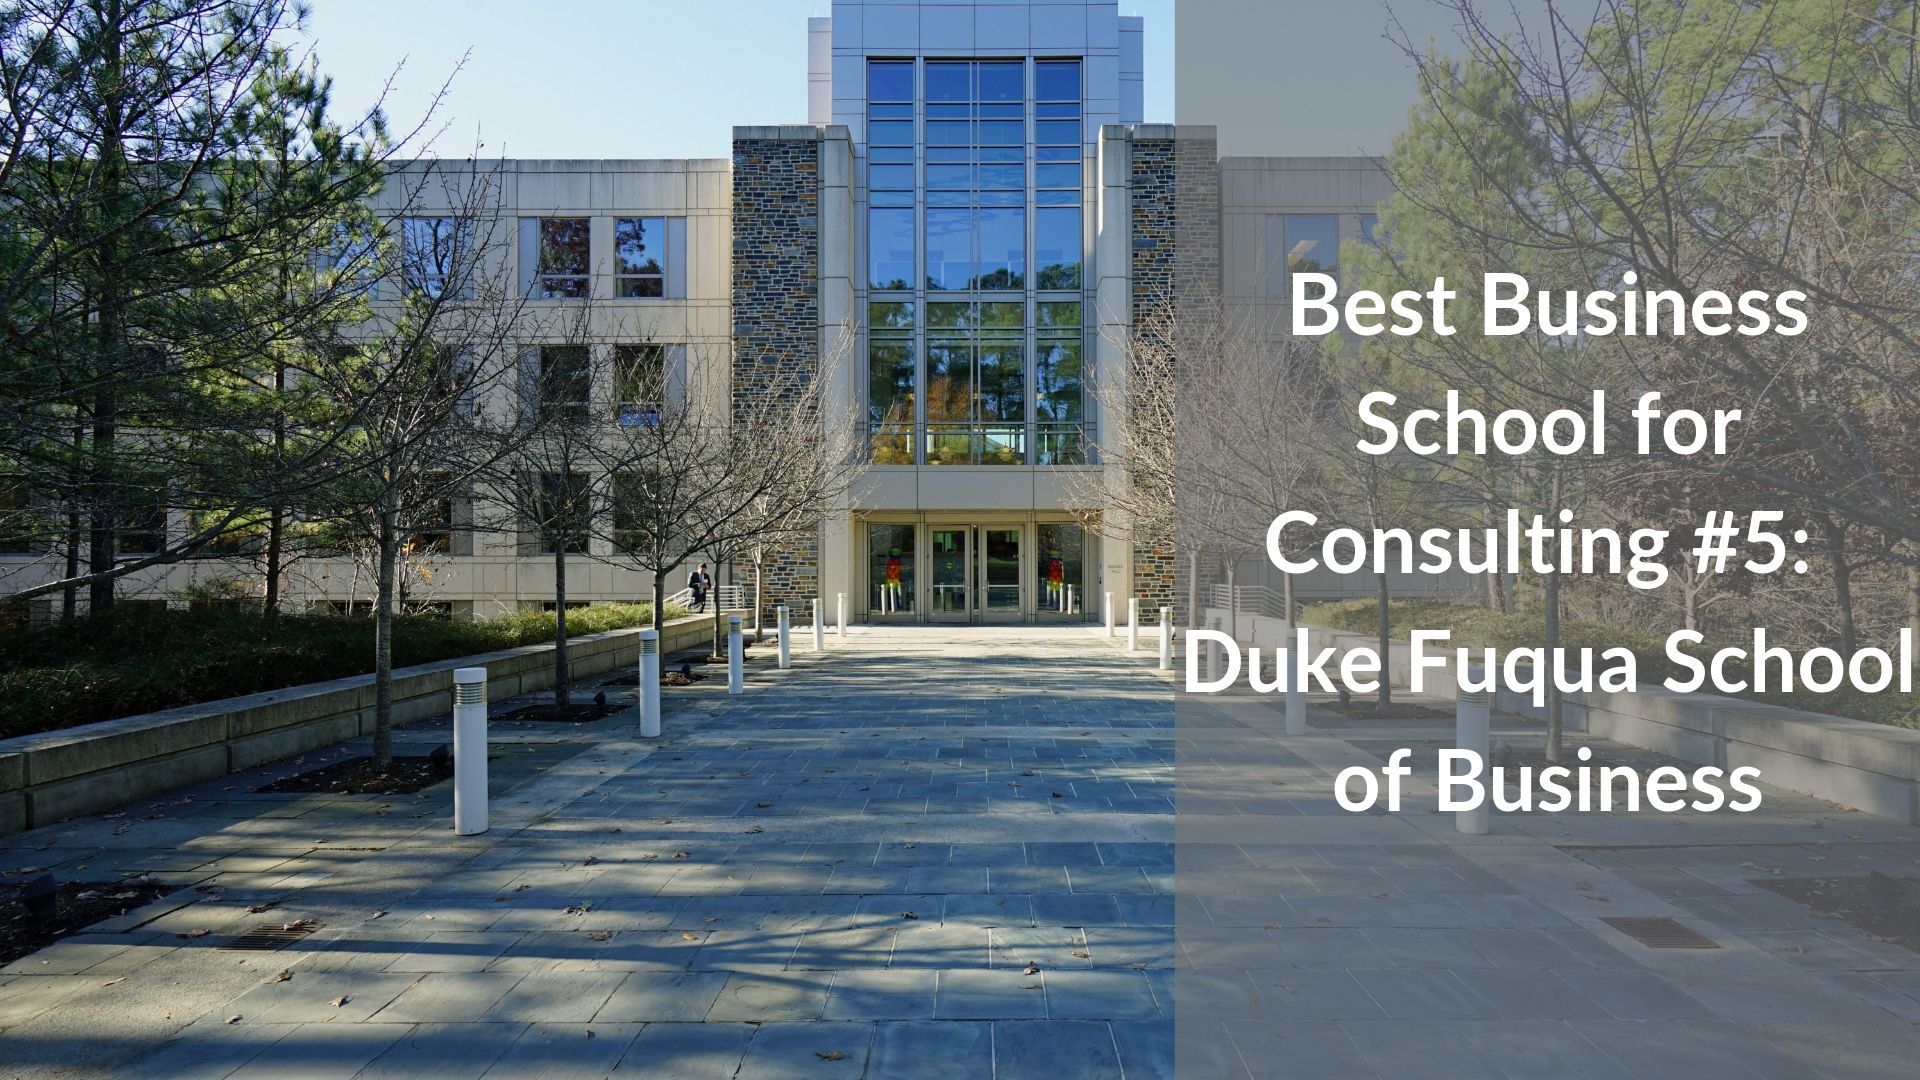 Best Business School for Consulting #5 - Duke Fuqua School of Business